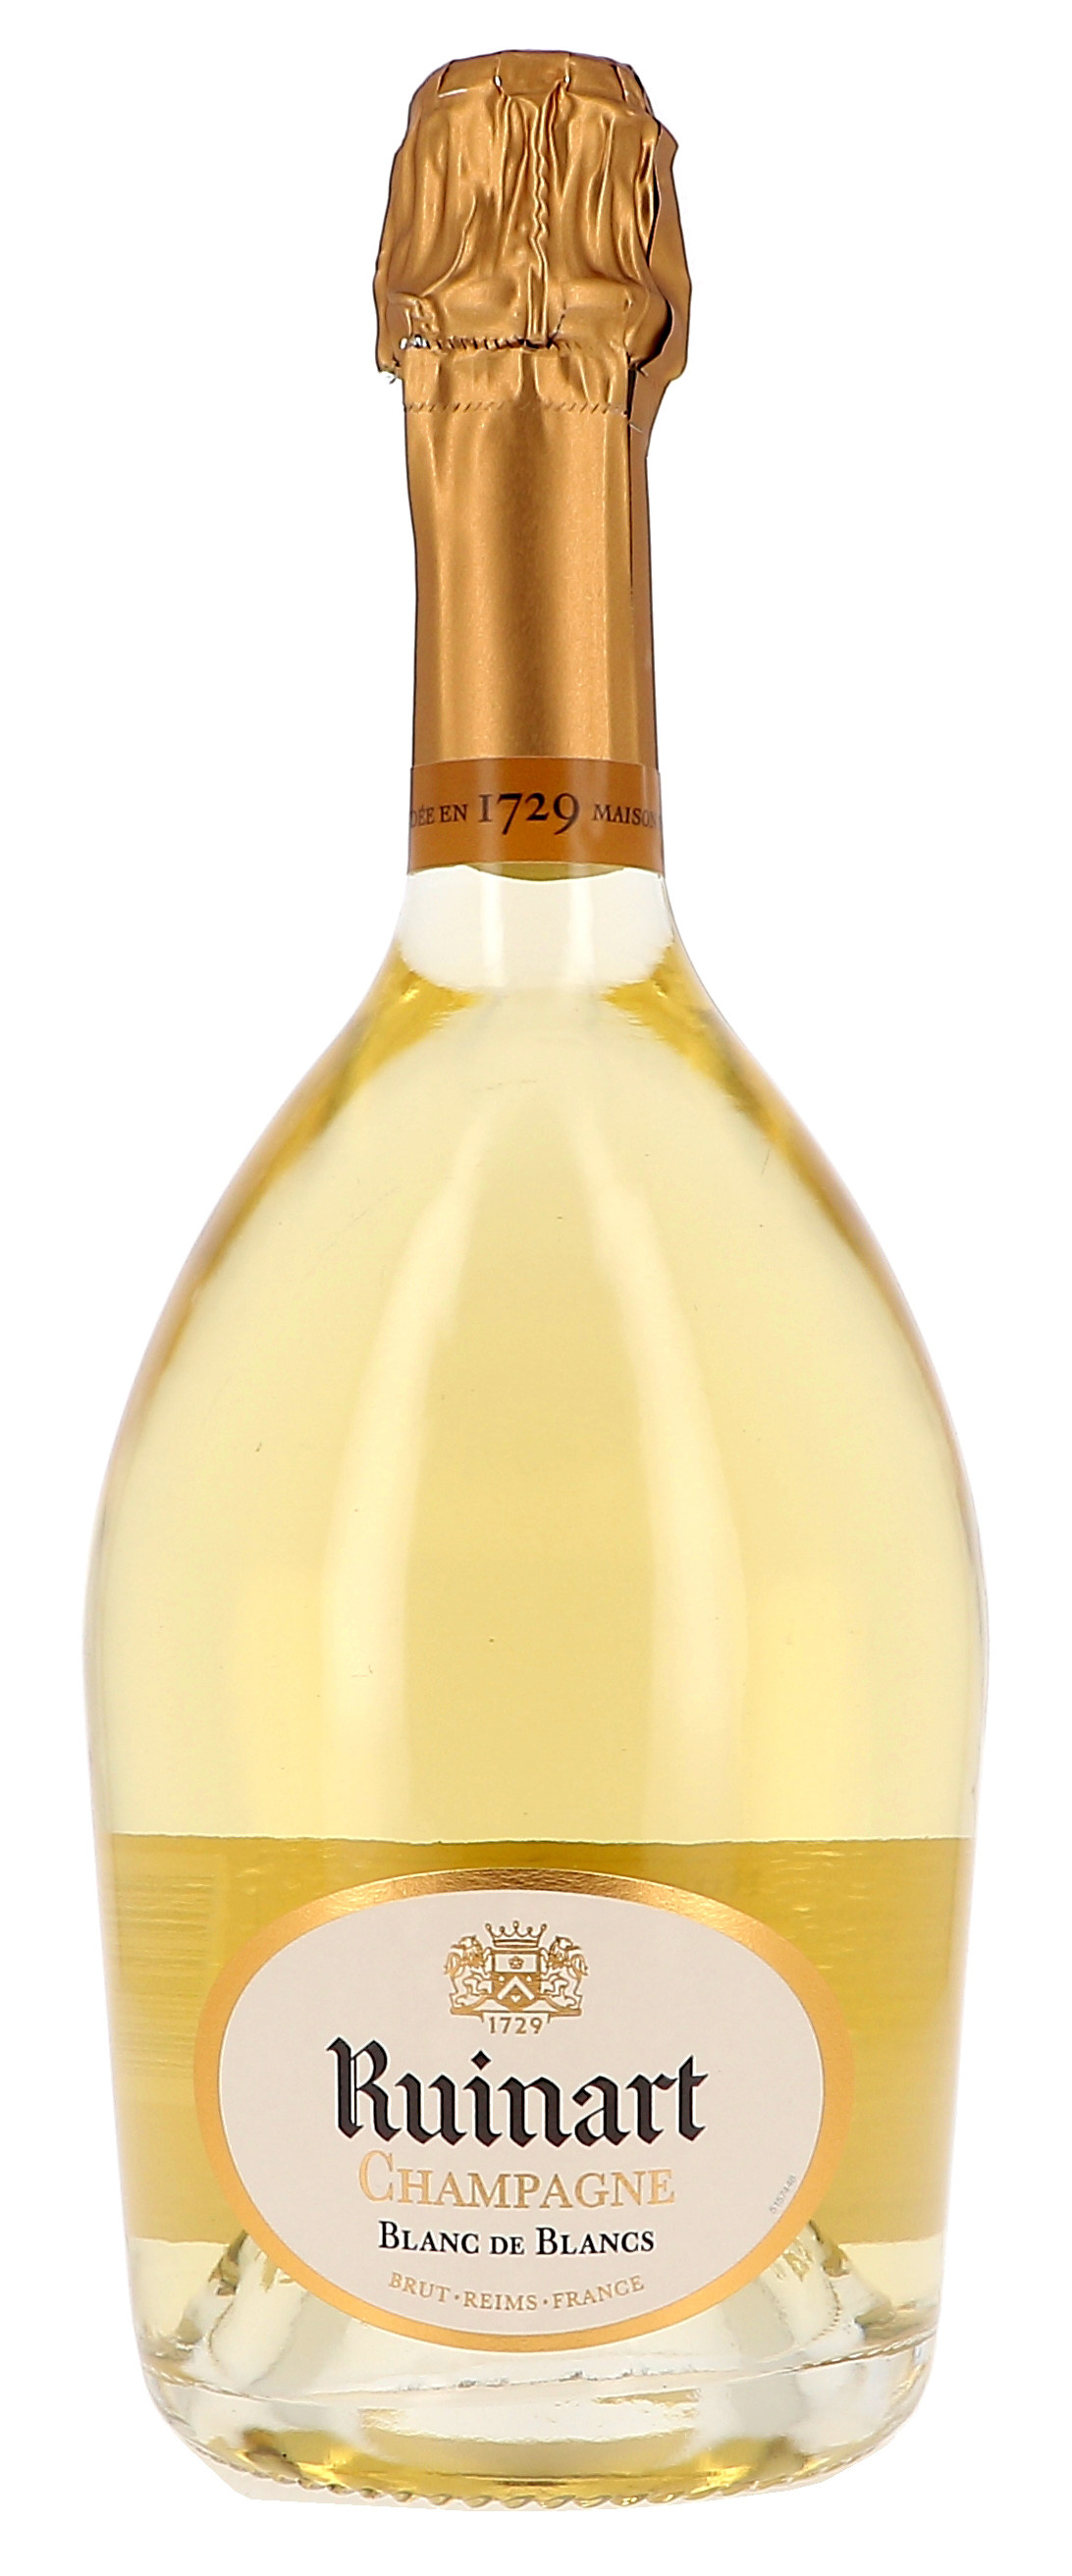 Champagne Ruinart Blanc de Blancs 75cl Brut + Gechenkdoos (Champagne)